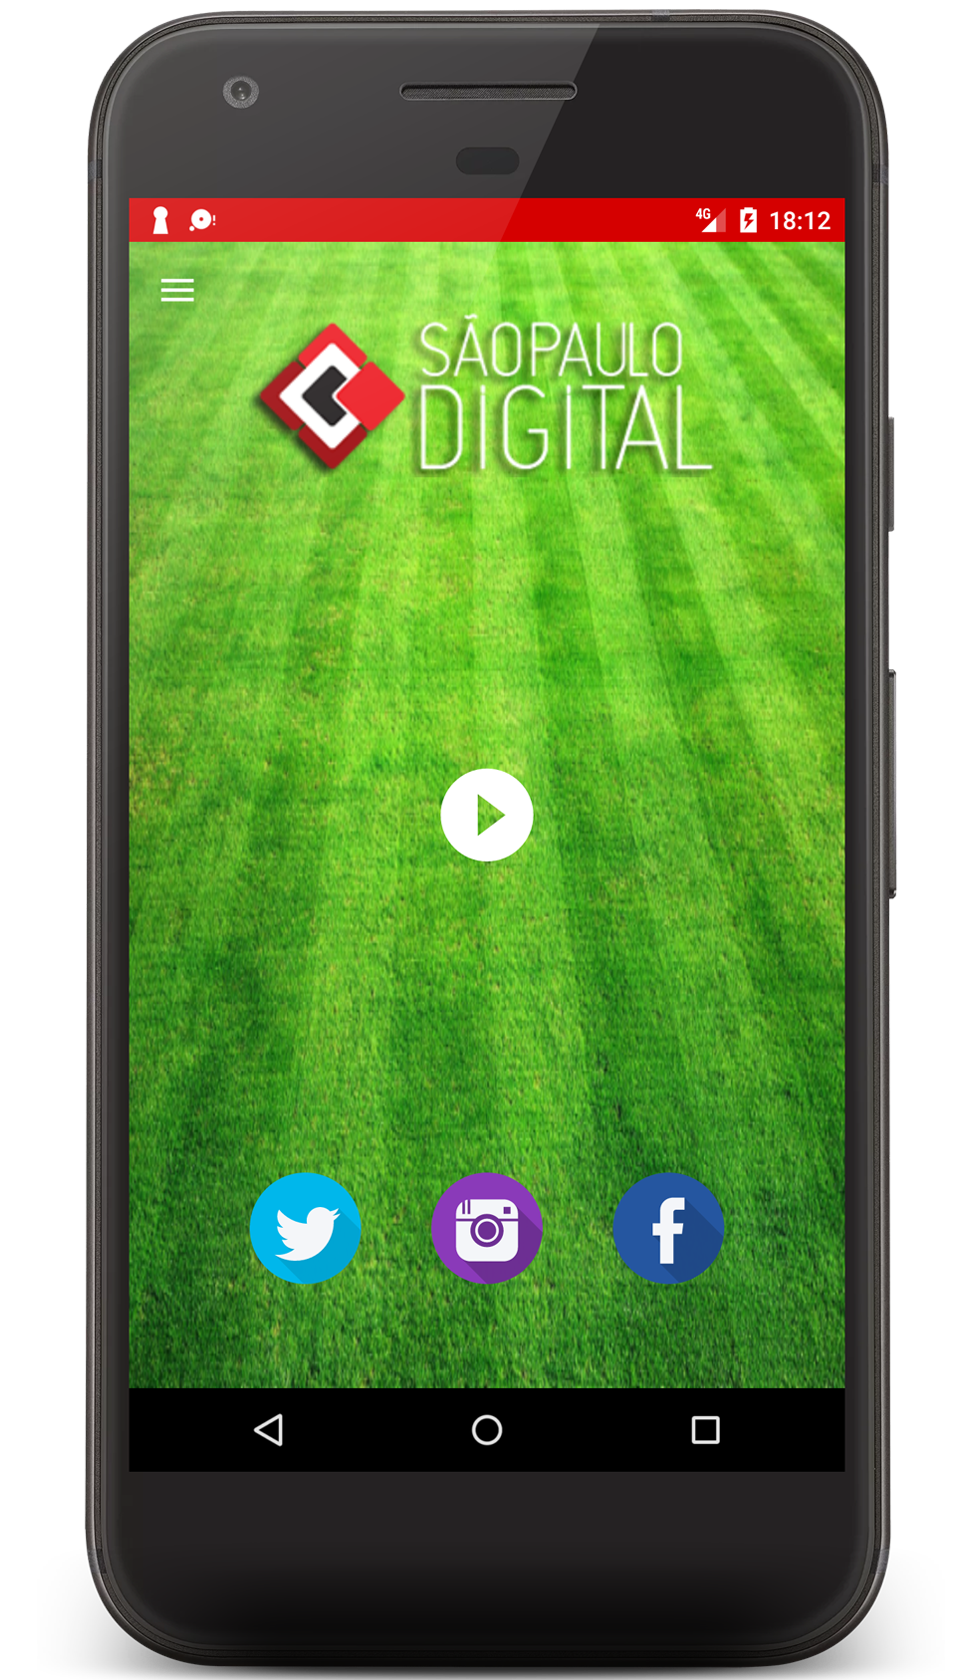 Android version of the São Paulo Digital app